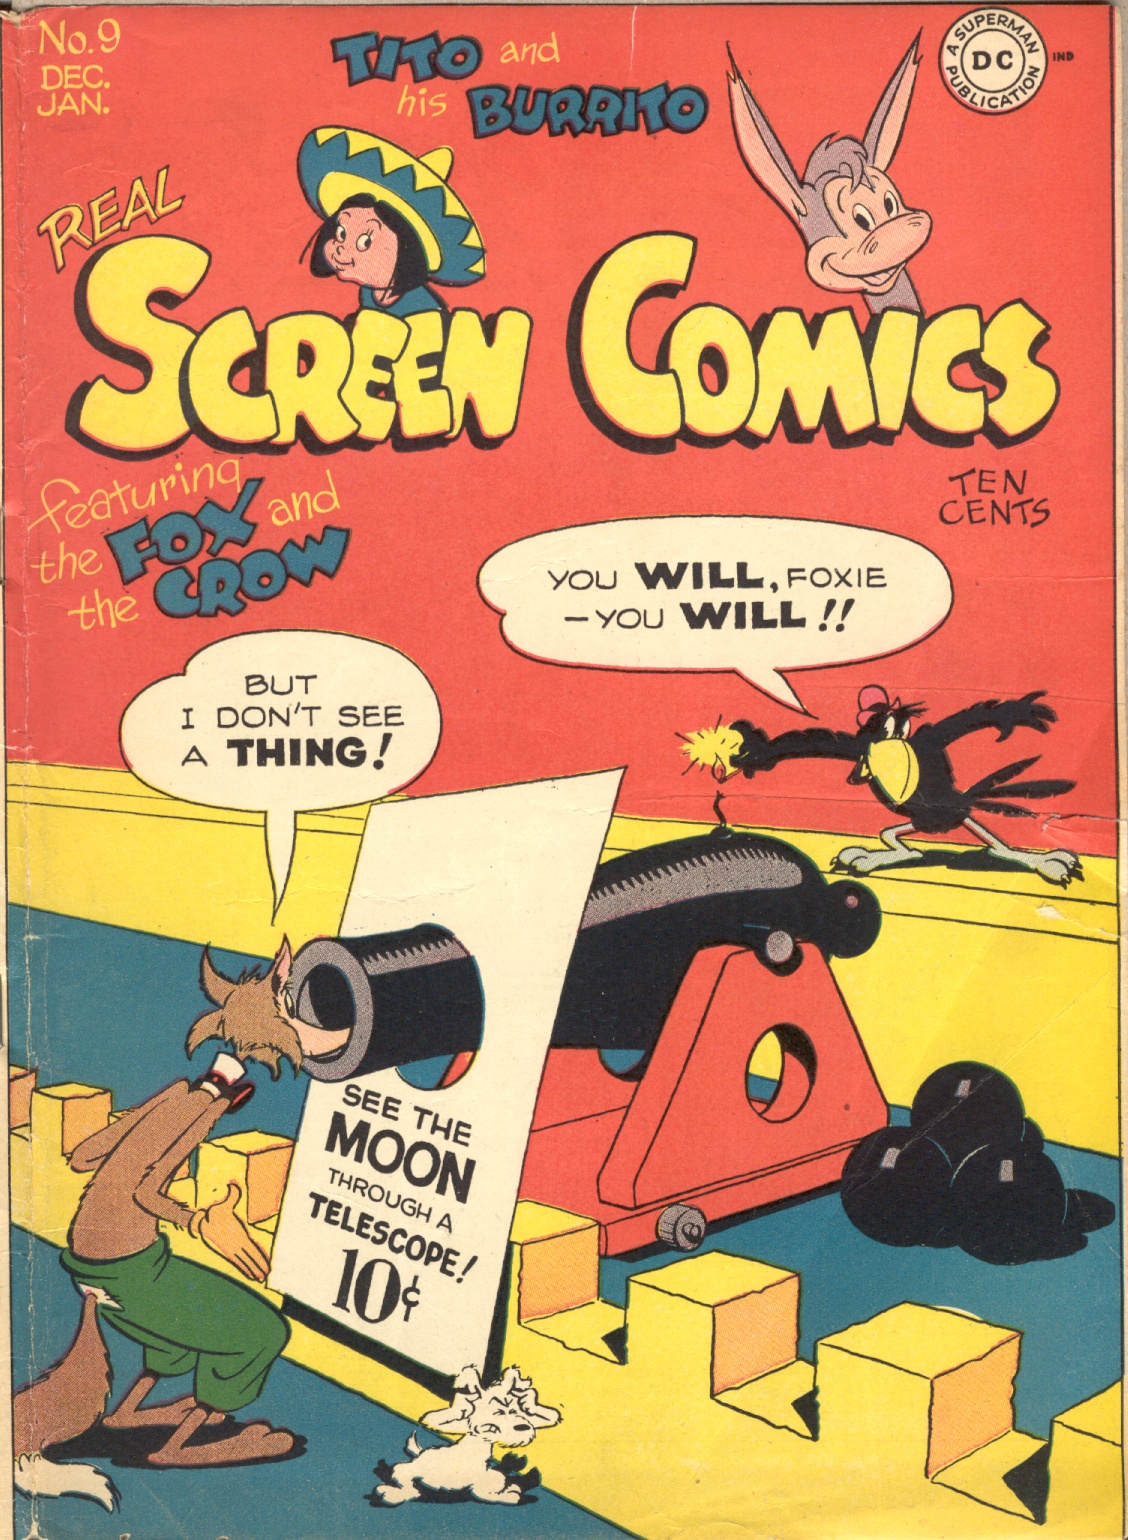 Read online Real Screen Comics comic -  Issue #9 - 1